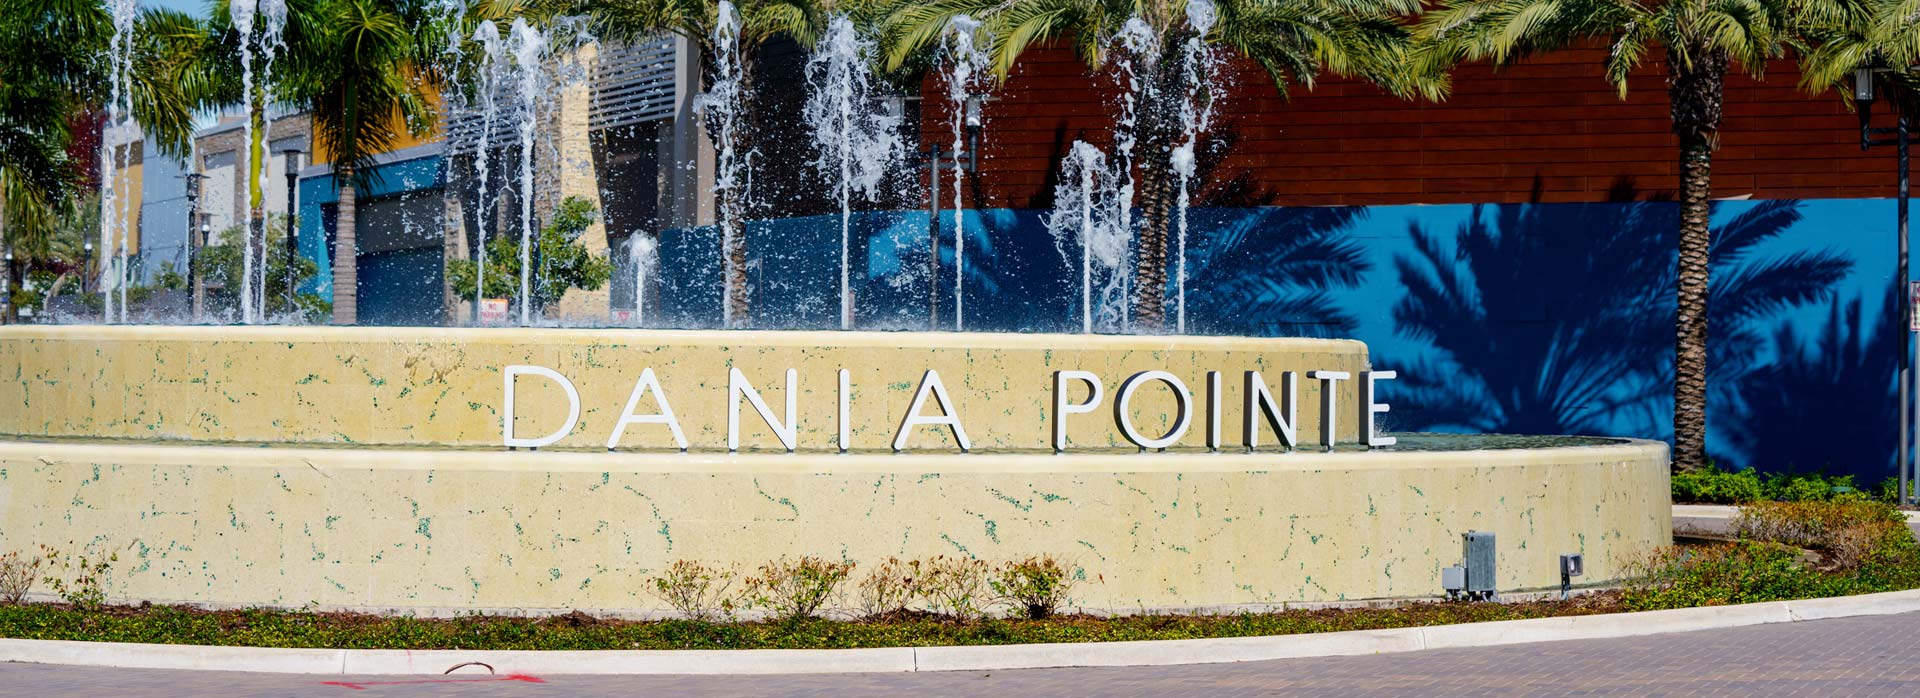 Dania Pointe Restaurants Food Tour South Florida Food Tour